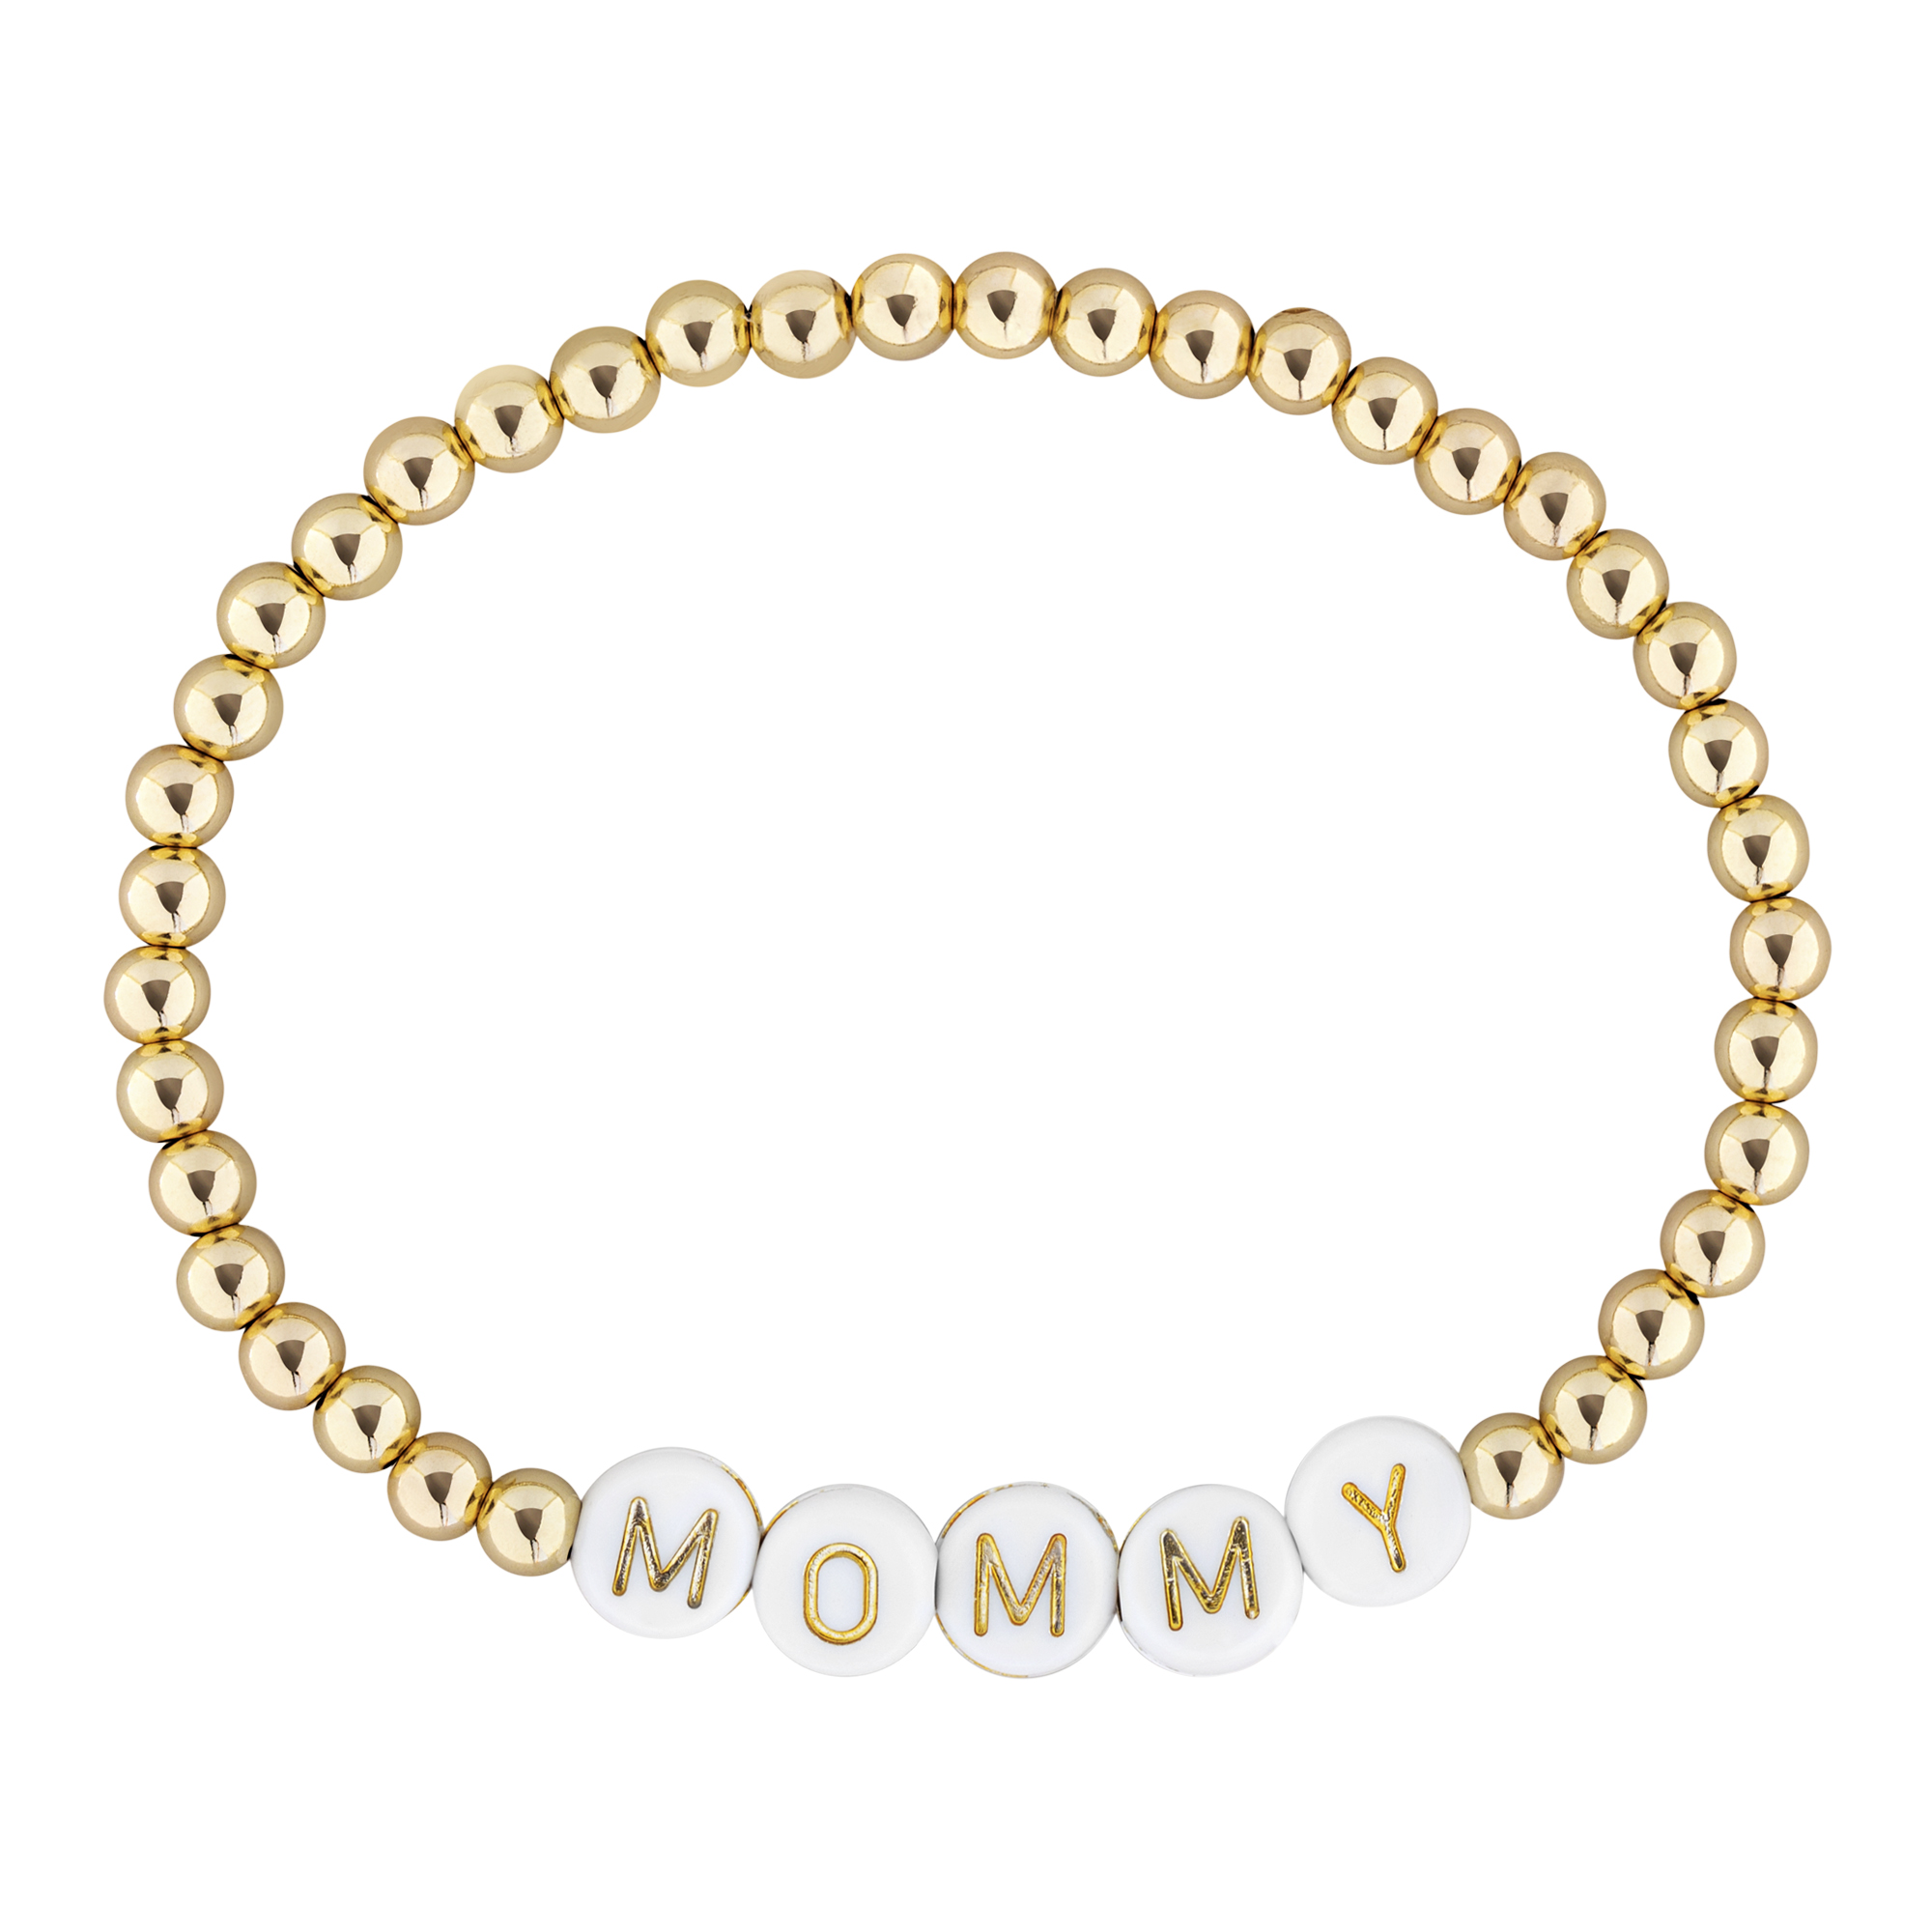 Mommy Gold Filled Word Beaded Bracelet by Bonnie Jennifer.